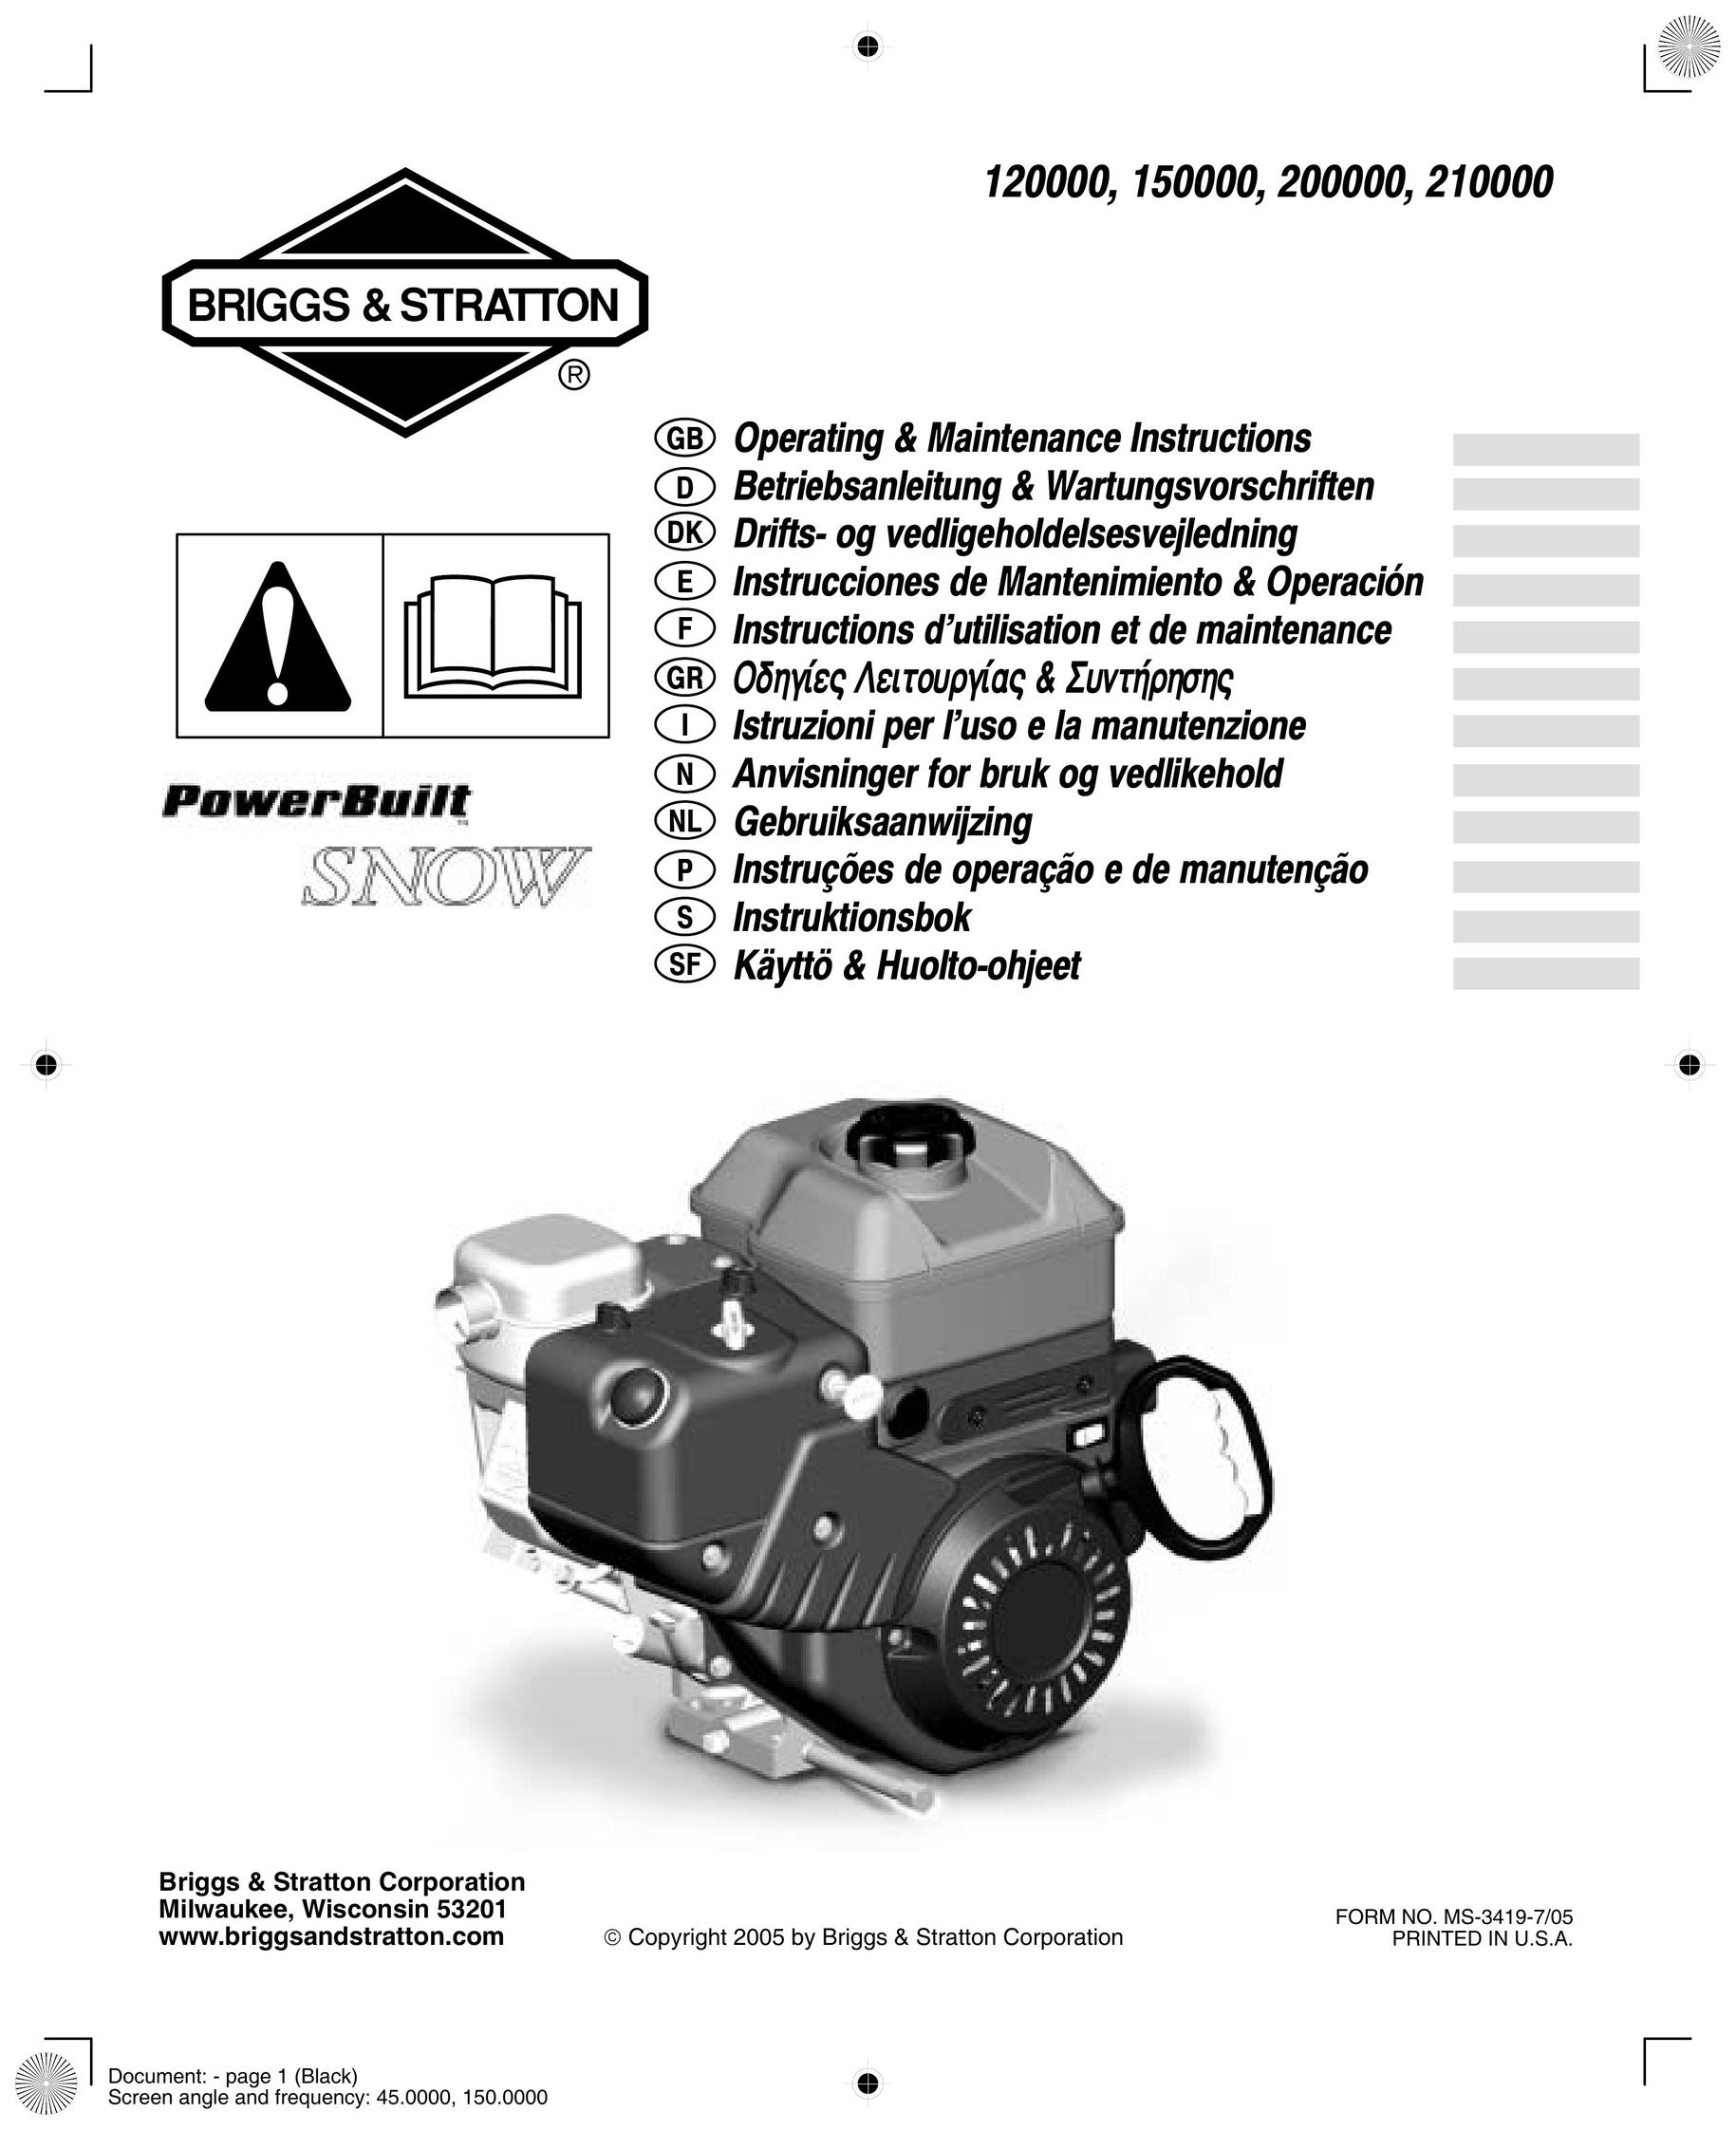 Briggs & Stratton 210000 Car Video System User Manual